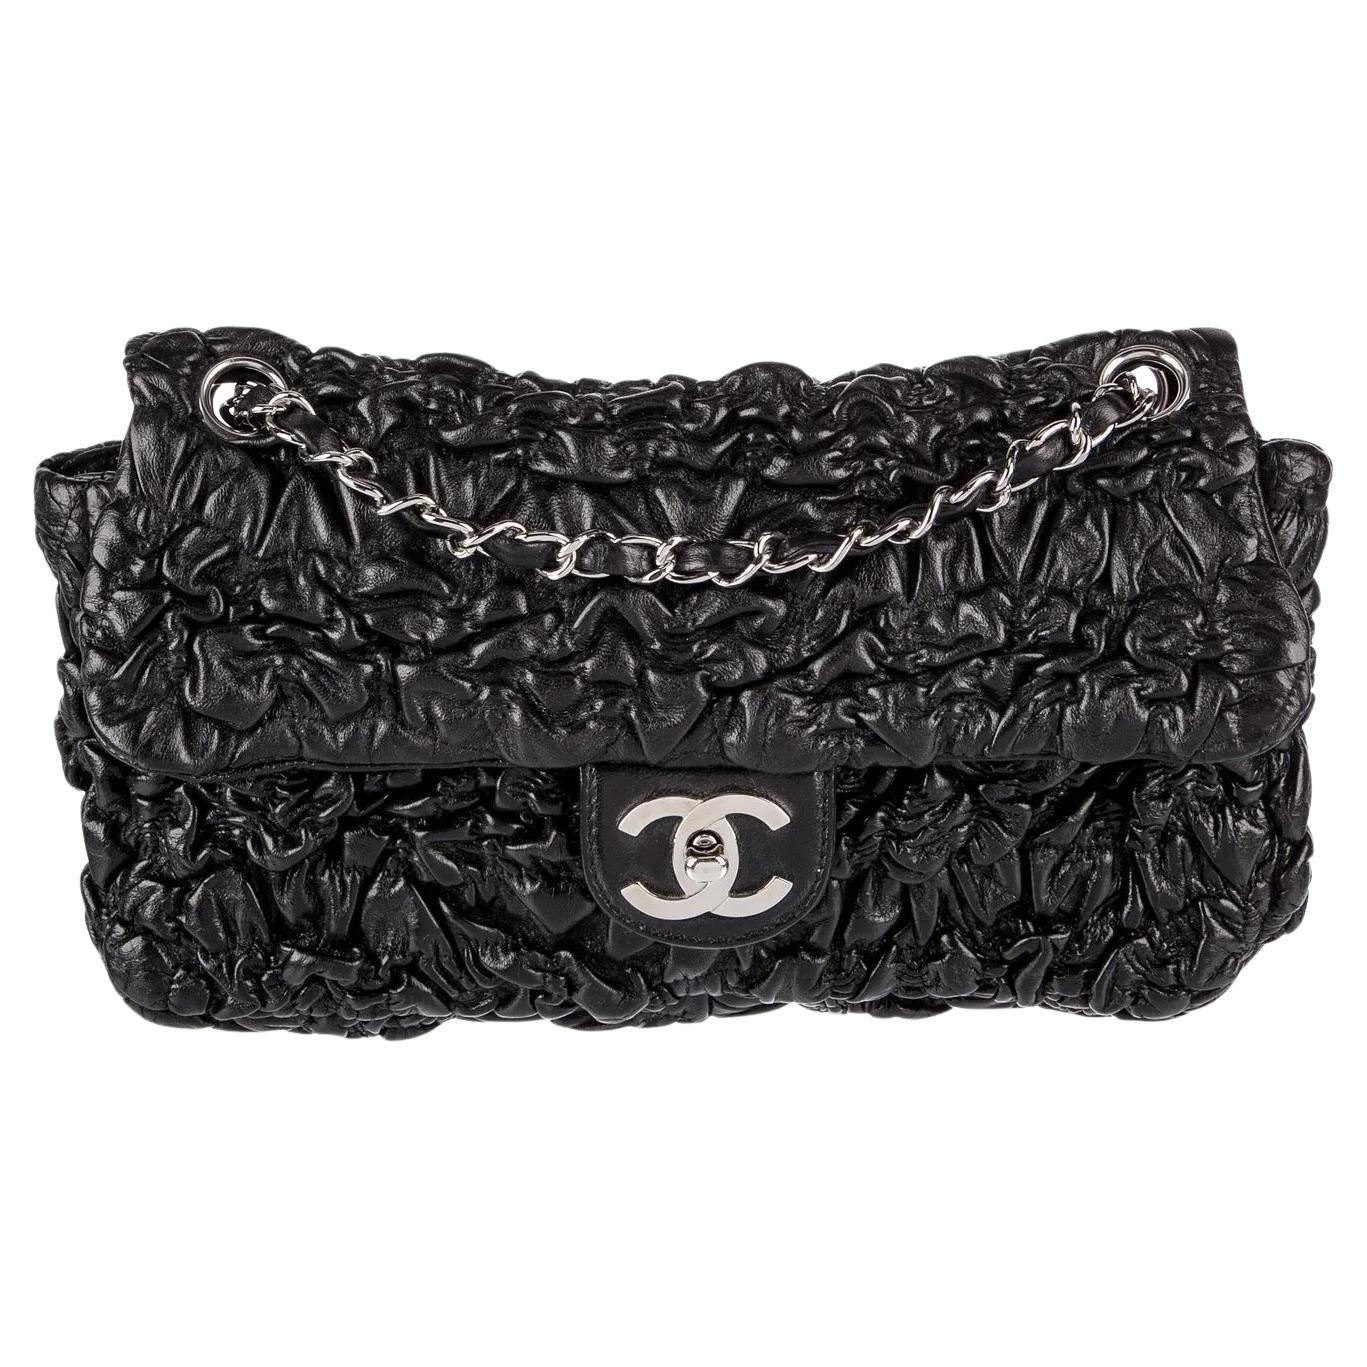 Chanel Herbst 2007 Gerüschtes, geknittertes, schwarzes Leder Medium Classic Flap Bag 